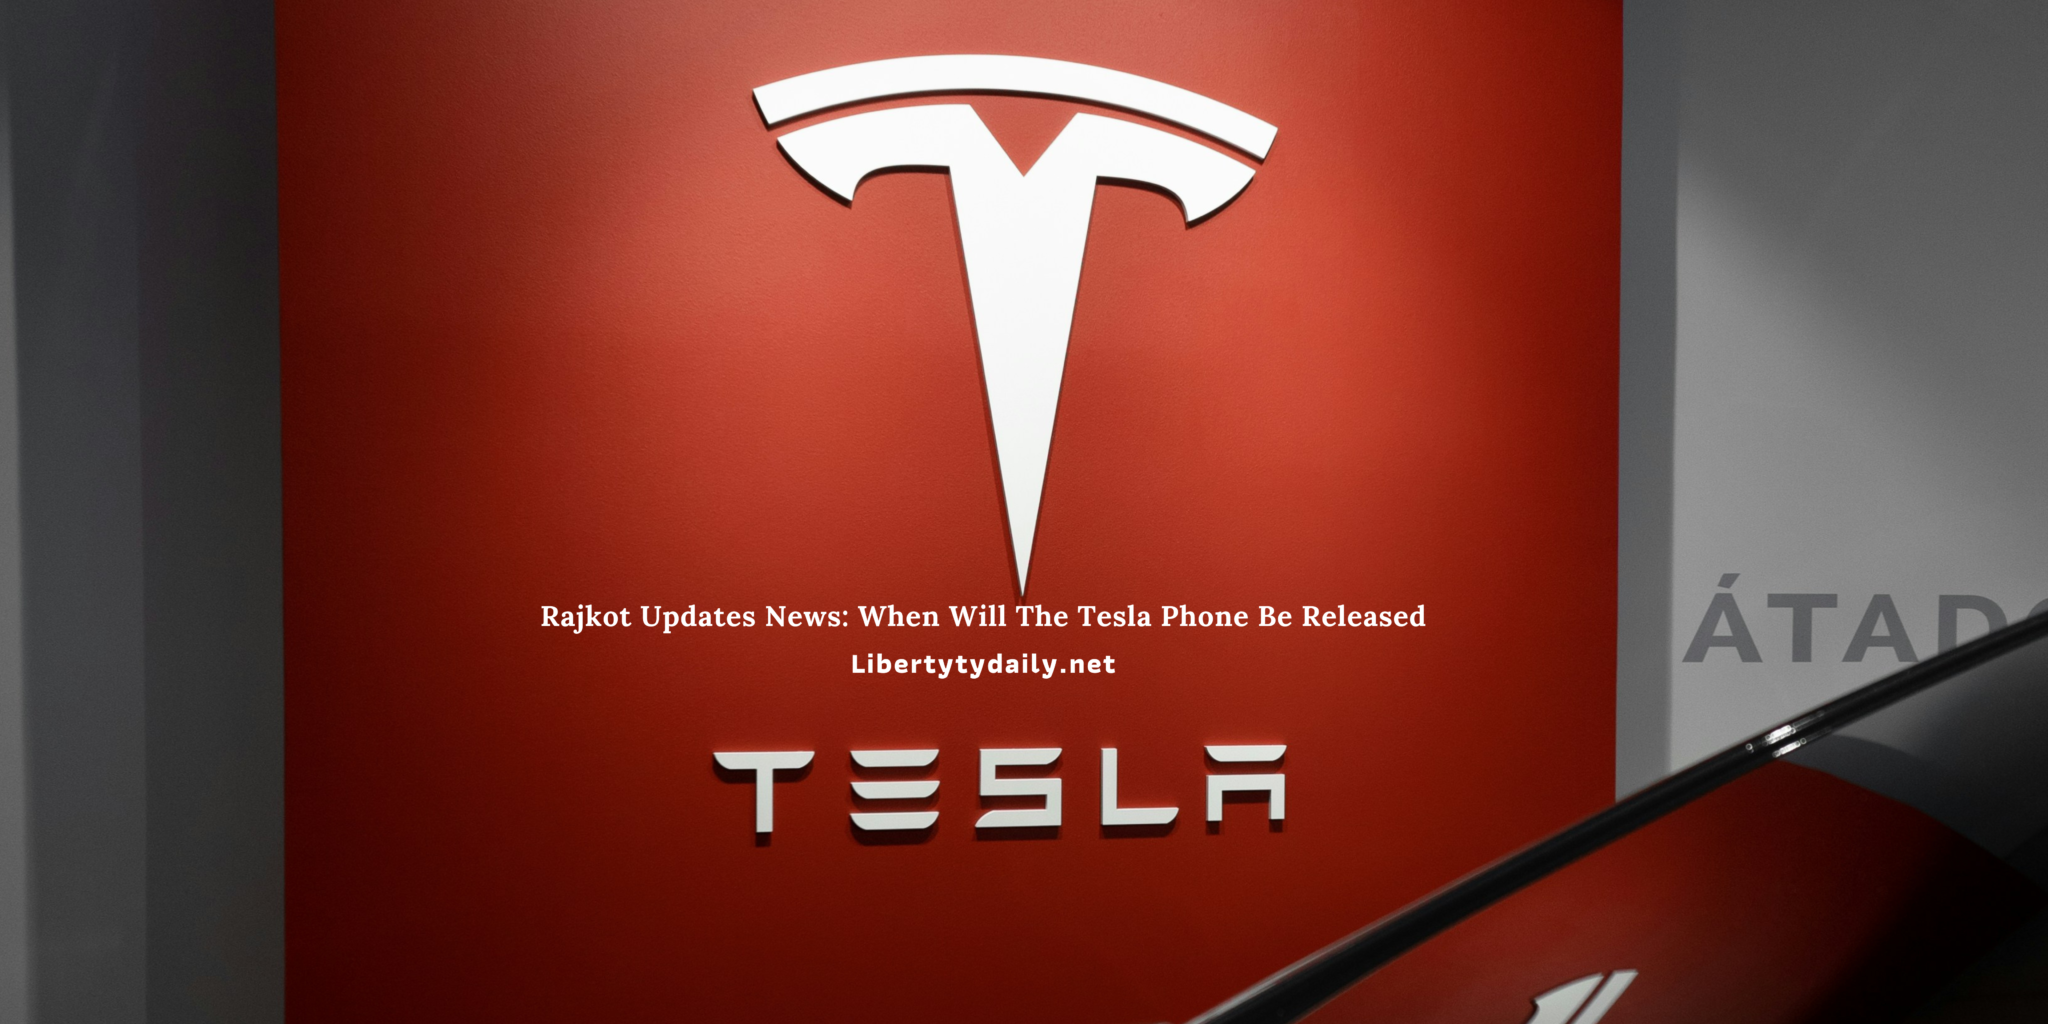 Rajkot Updates News: When Will The Tesla Phone Be Released